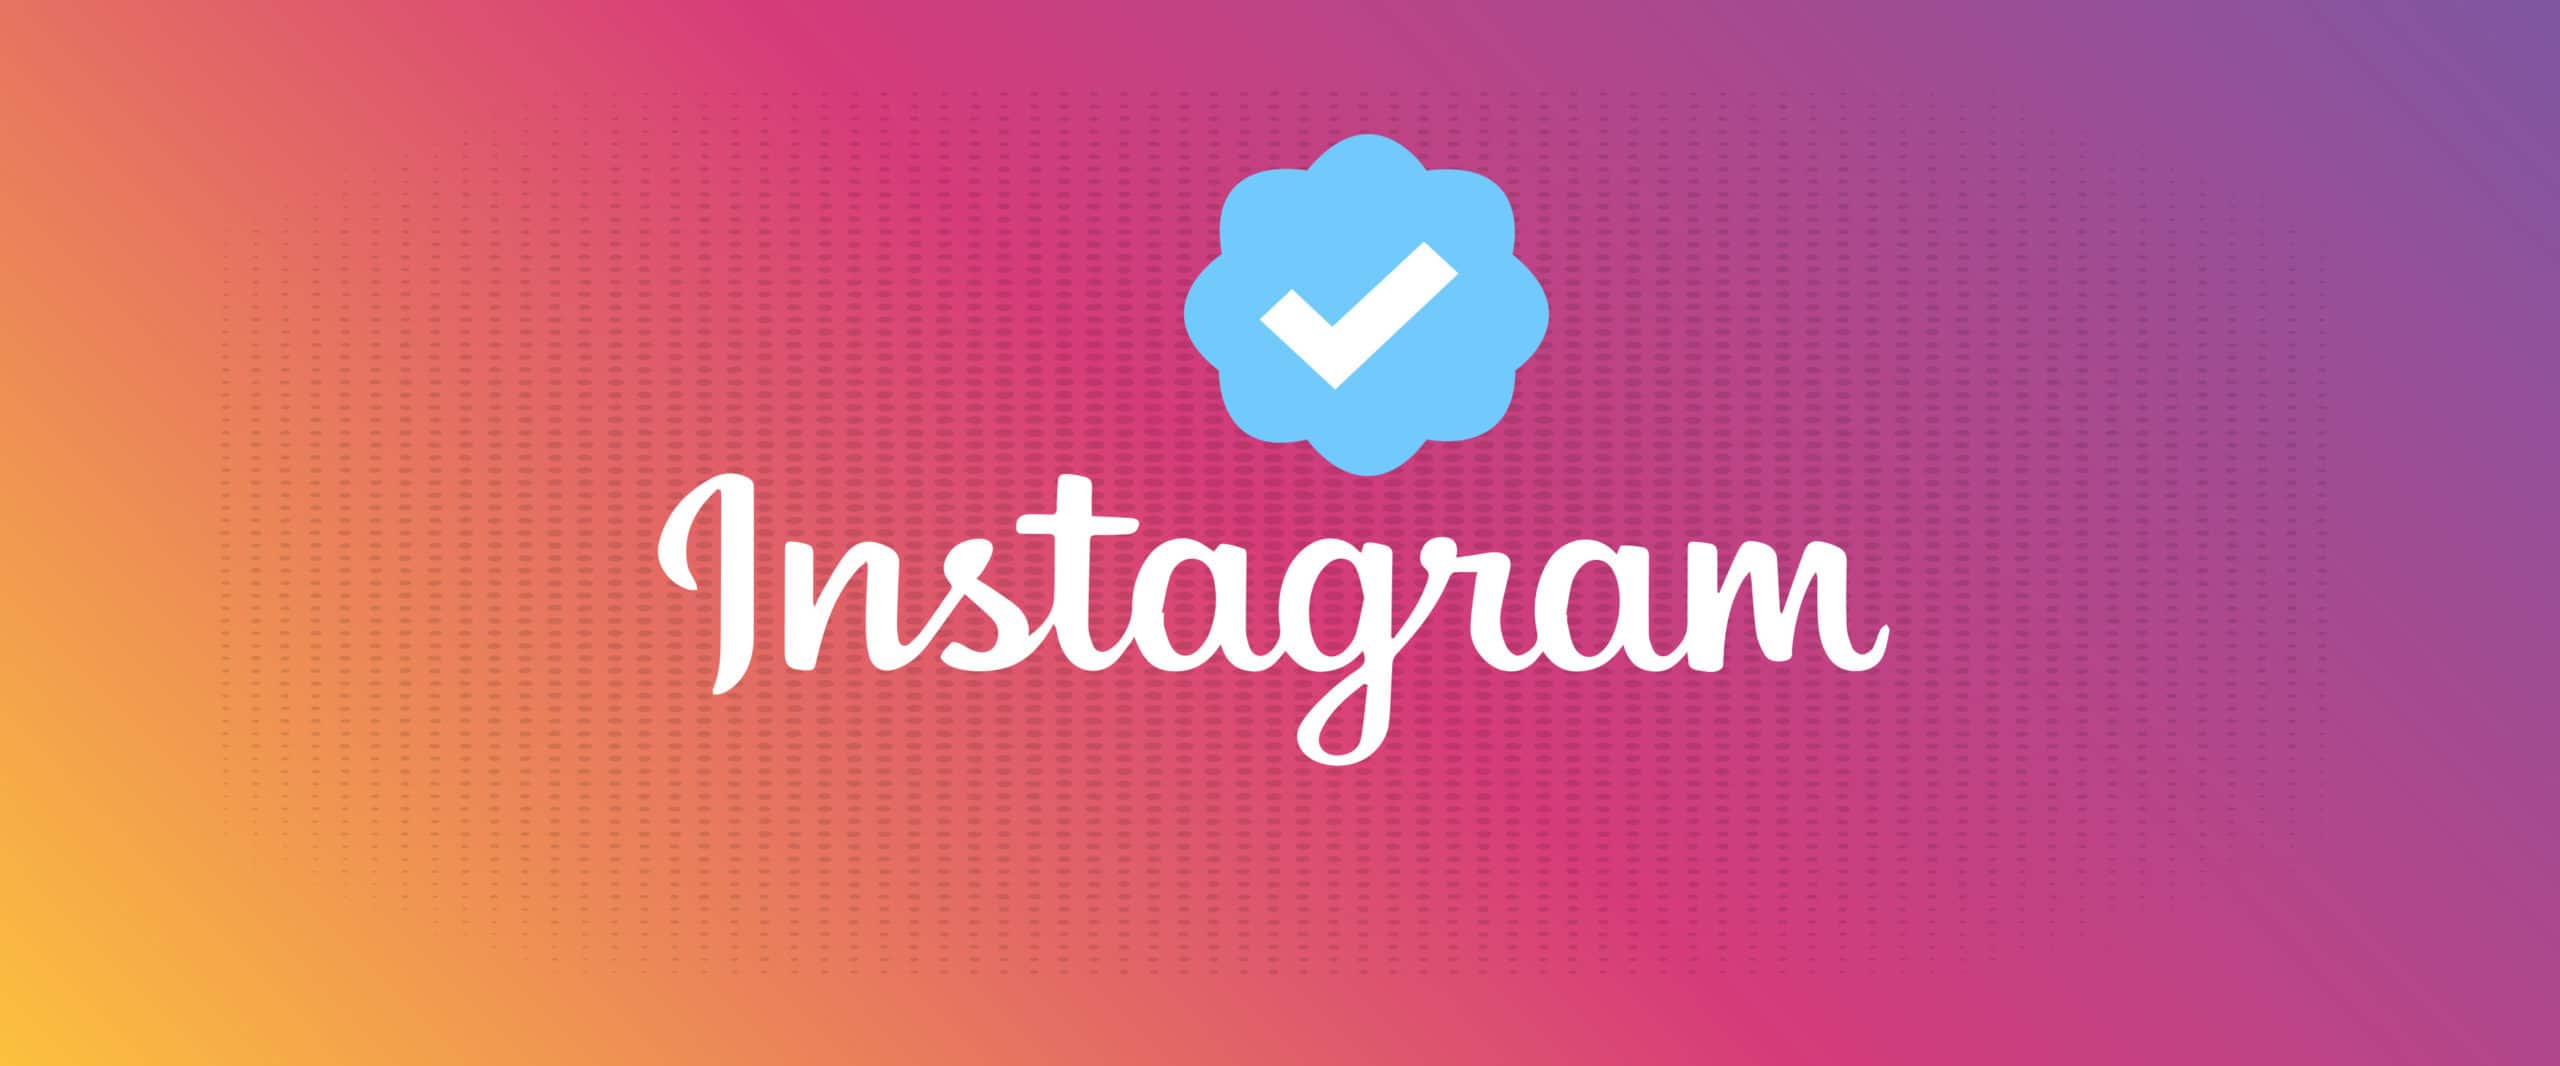 verificar instagram